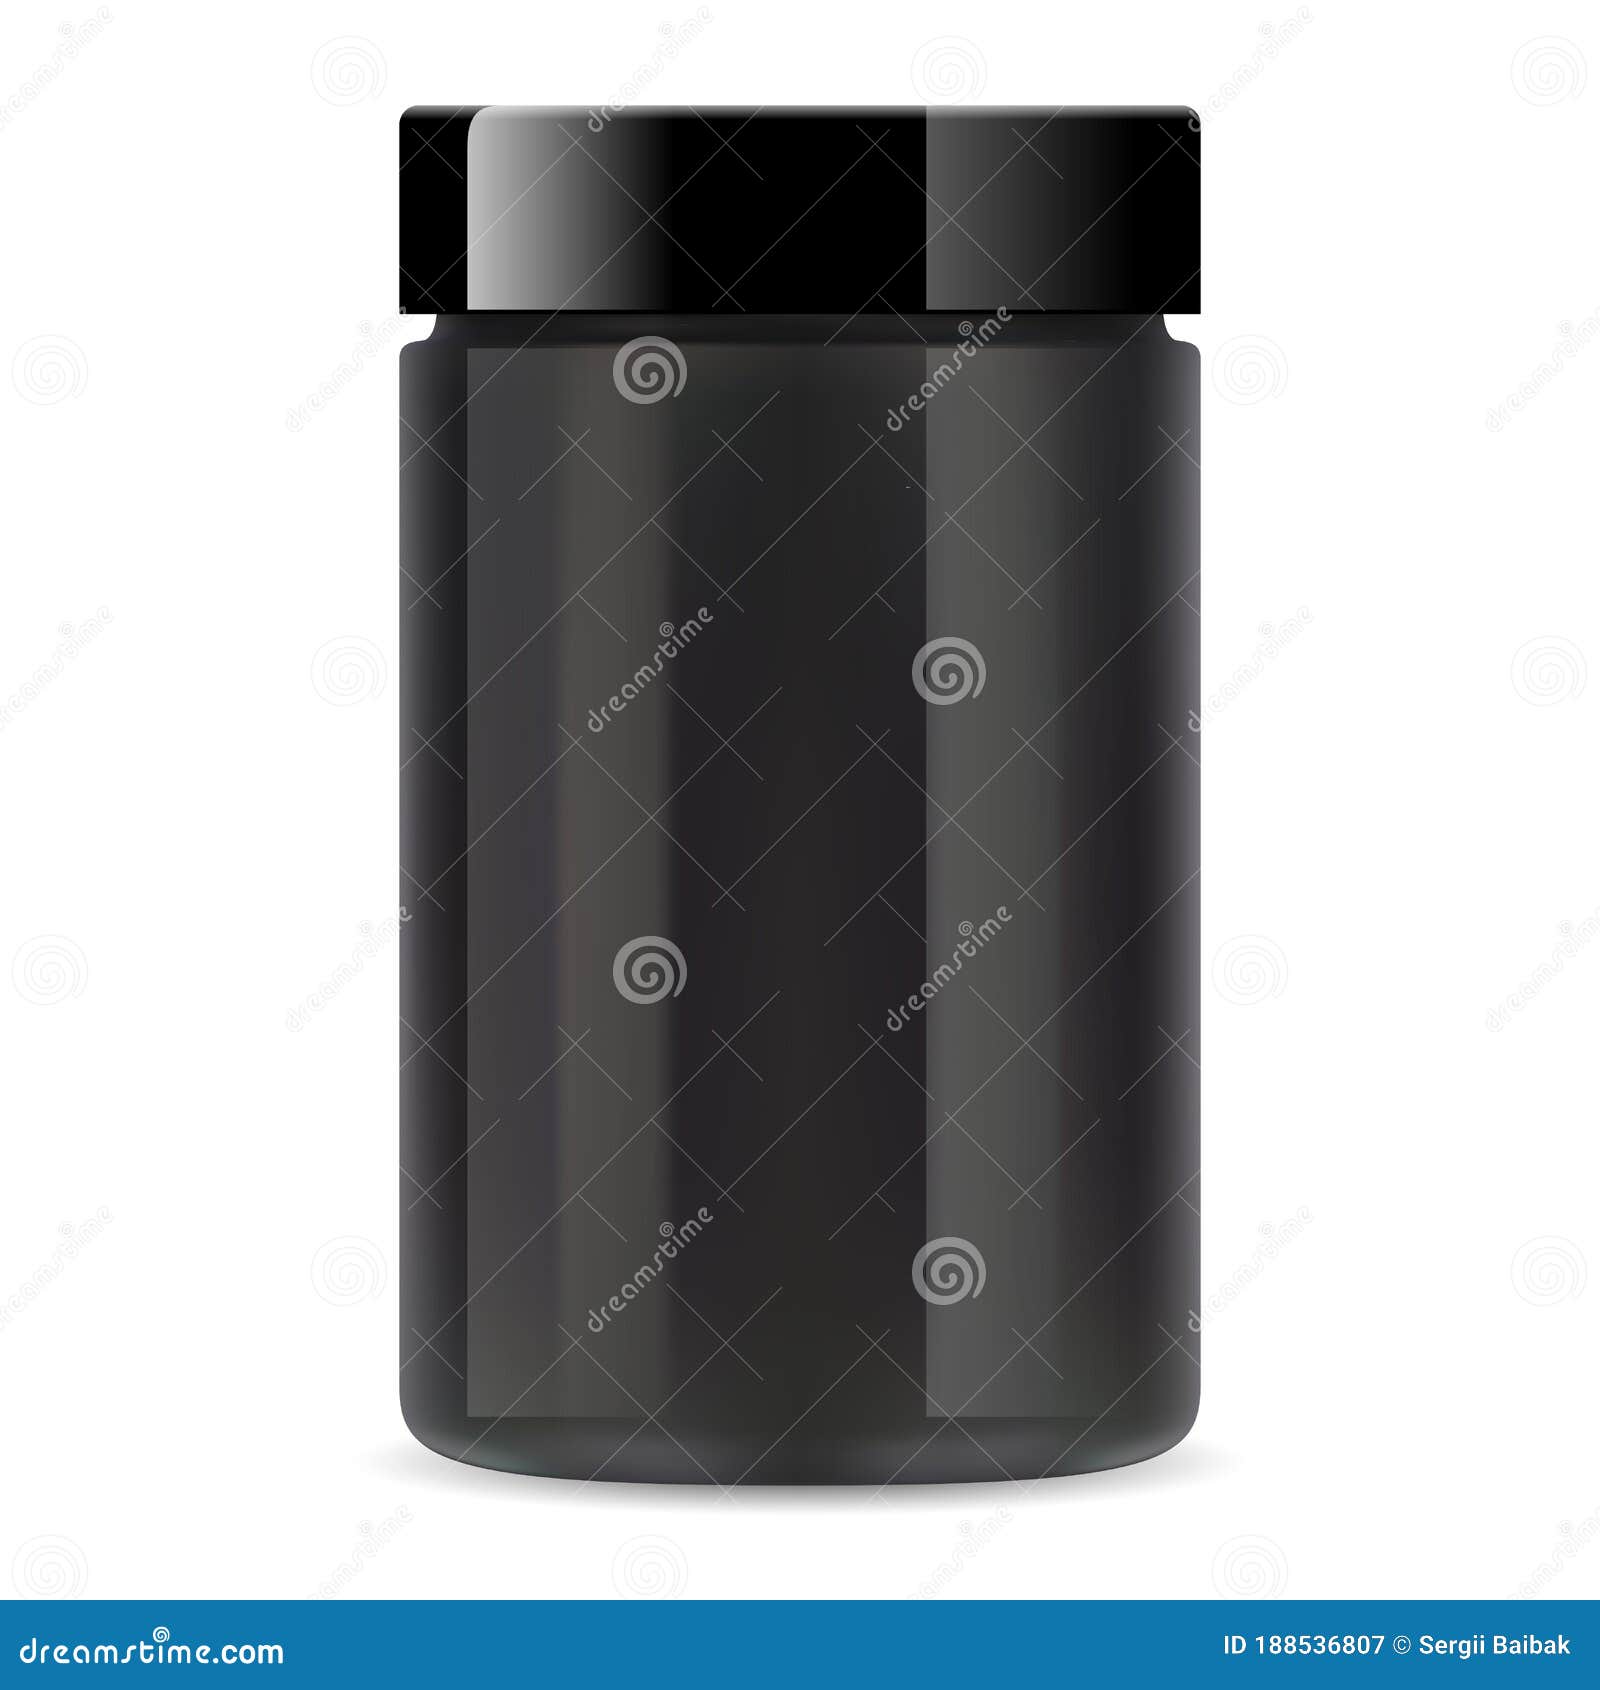 https://thumbs.dreamstime.com/z/black-plastic-jar-protein-supplement-container-black-plastic-jar-protein-supplement-container-mockup-whey-protein-powder-can-188536807.jpg